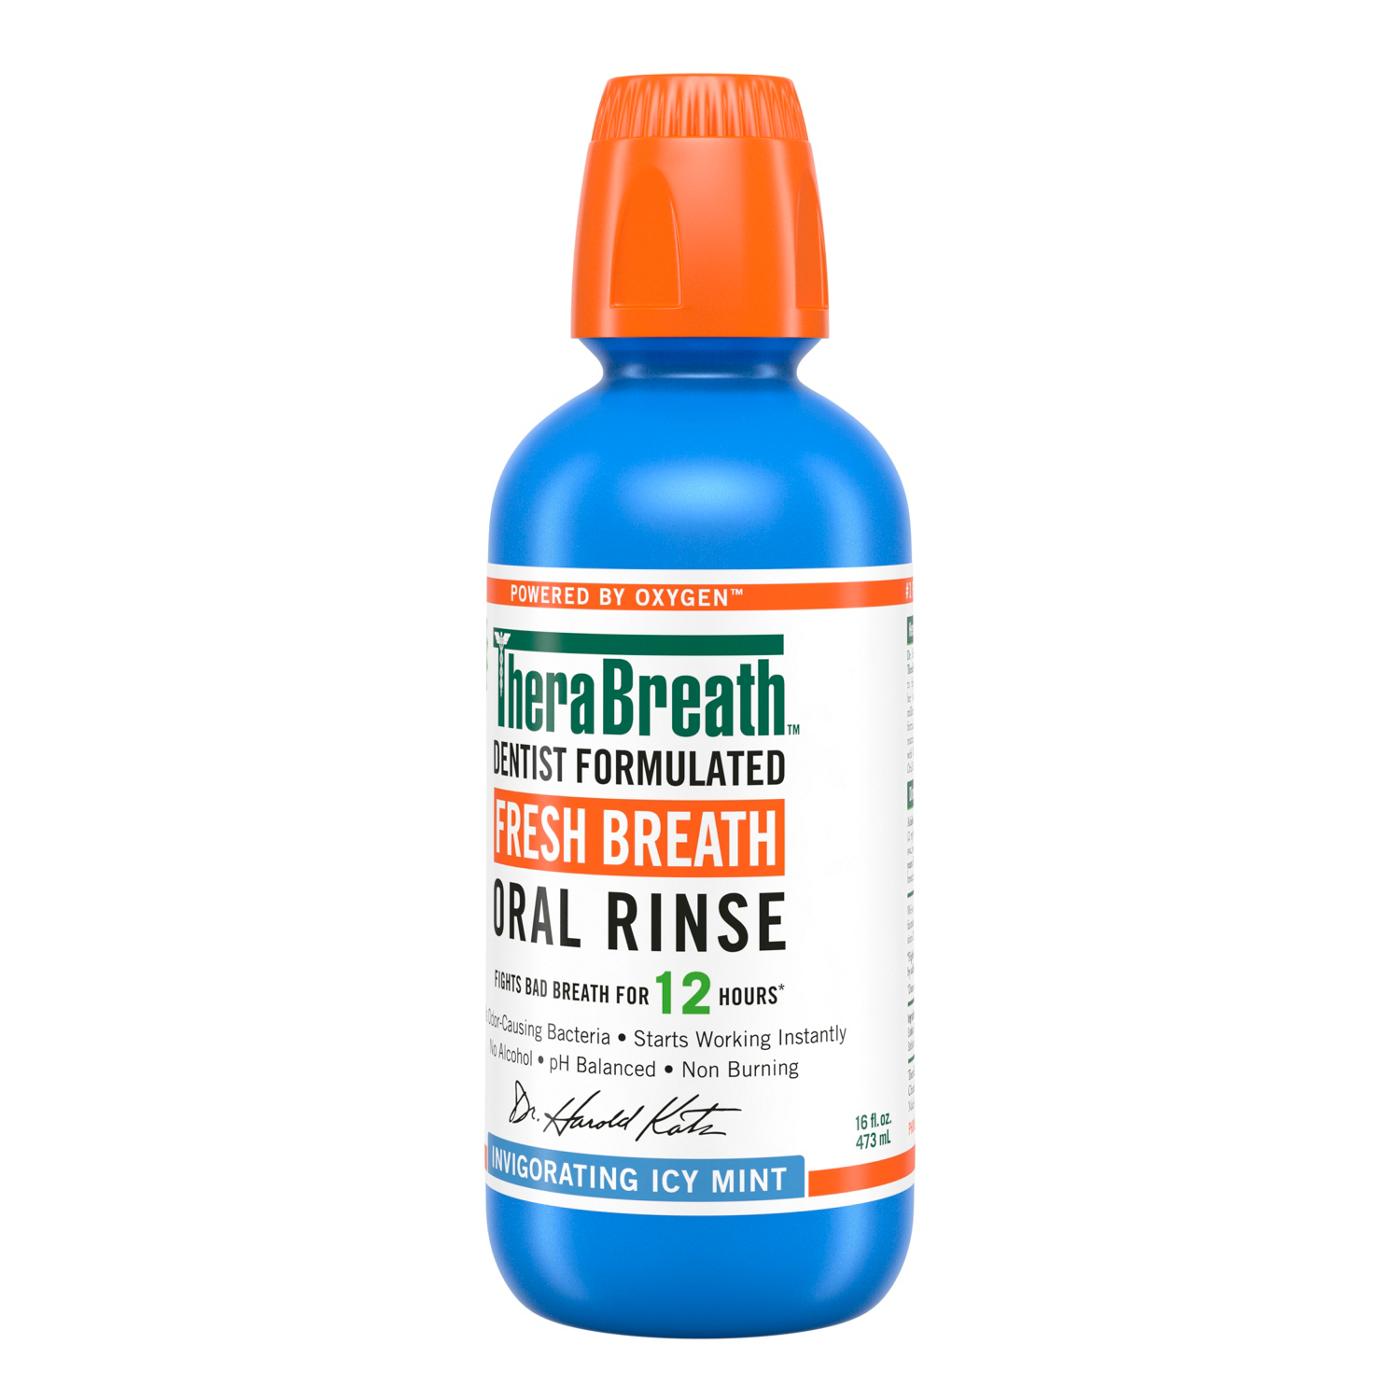 TheraBreath Fresh Breath Oral Rinse - Icy Mint; image 4 of 6